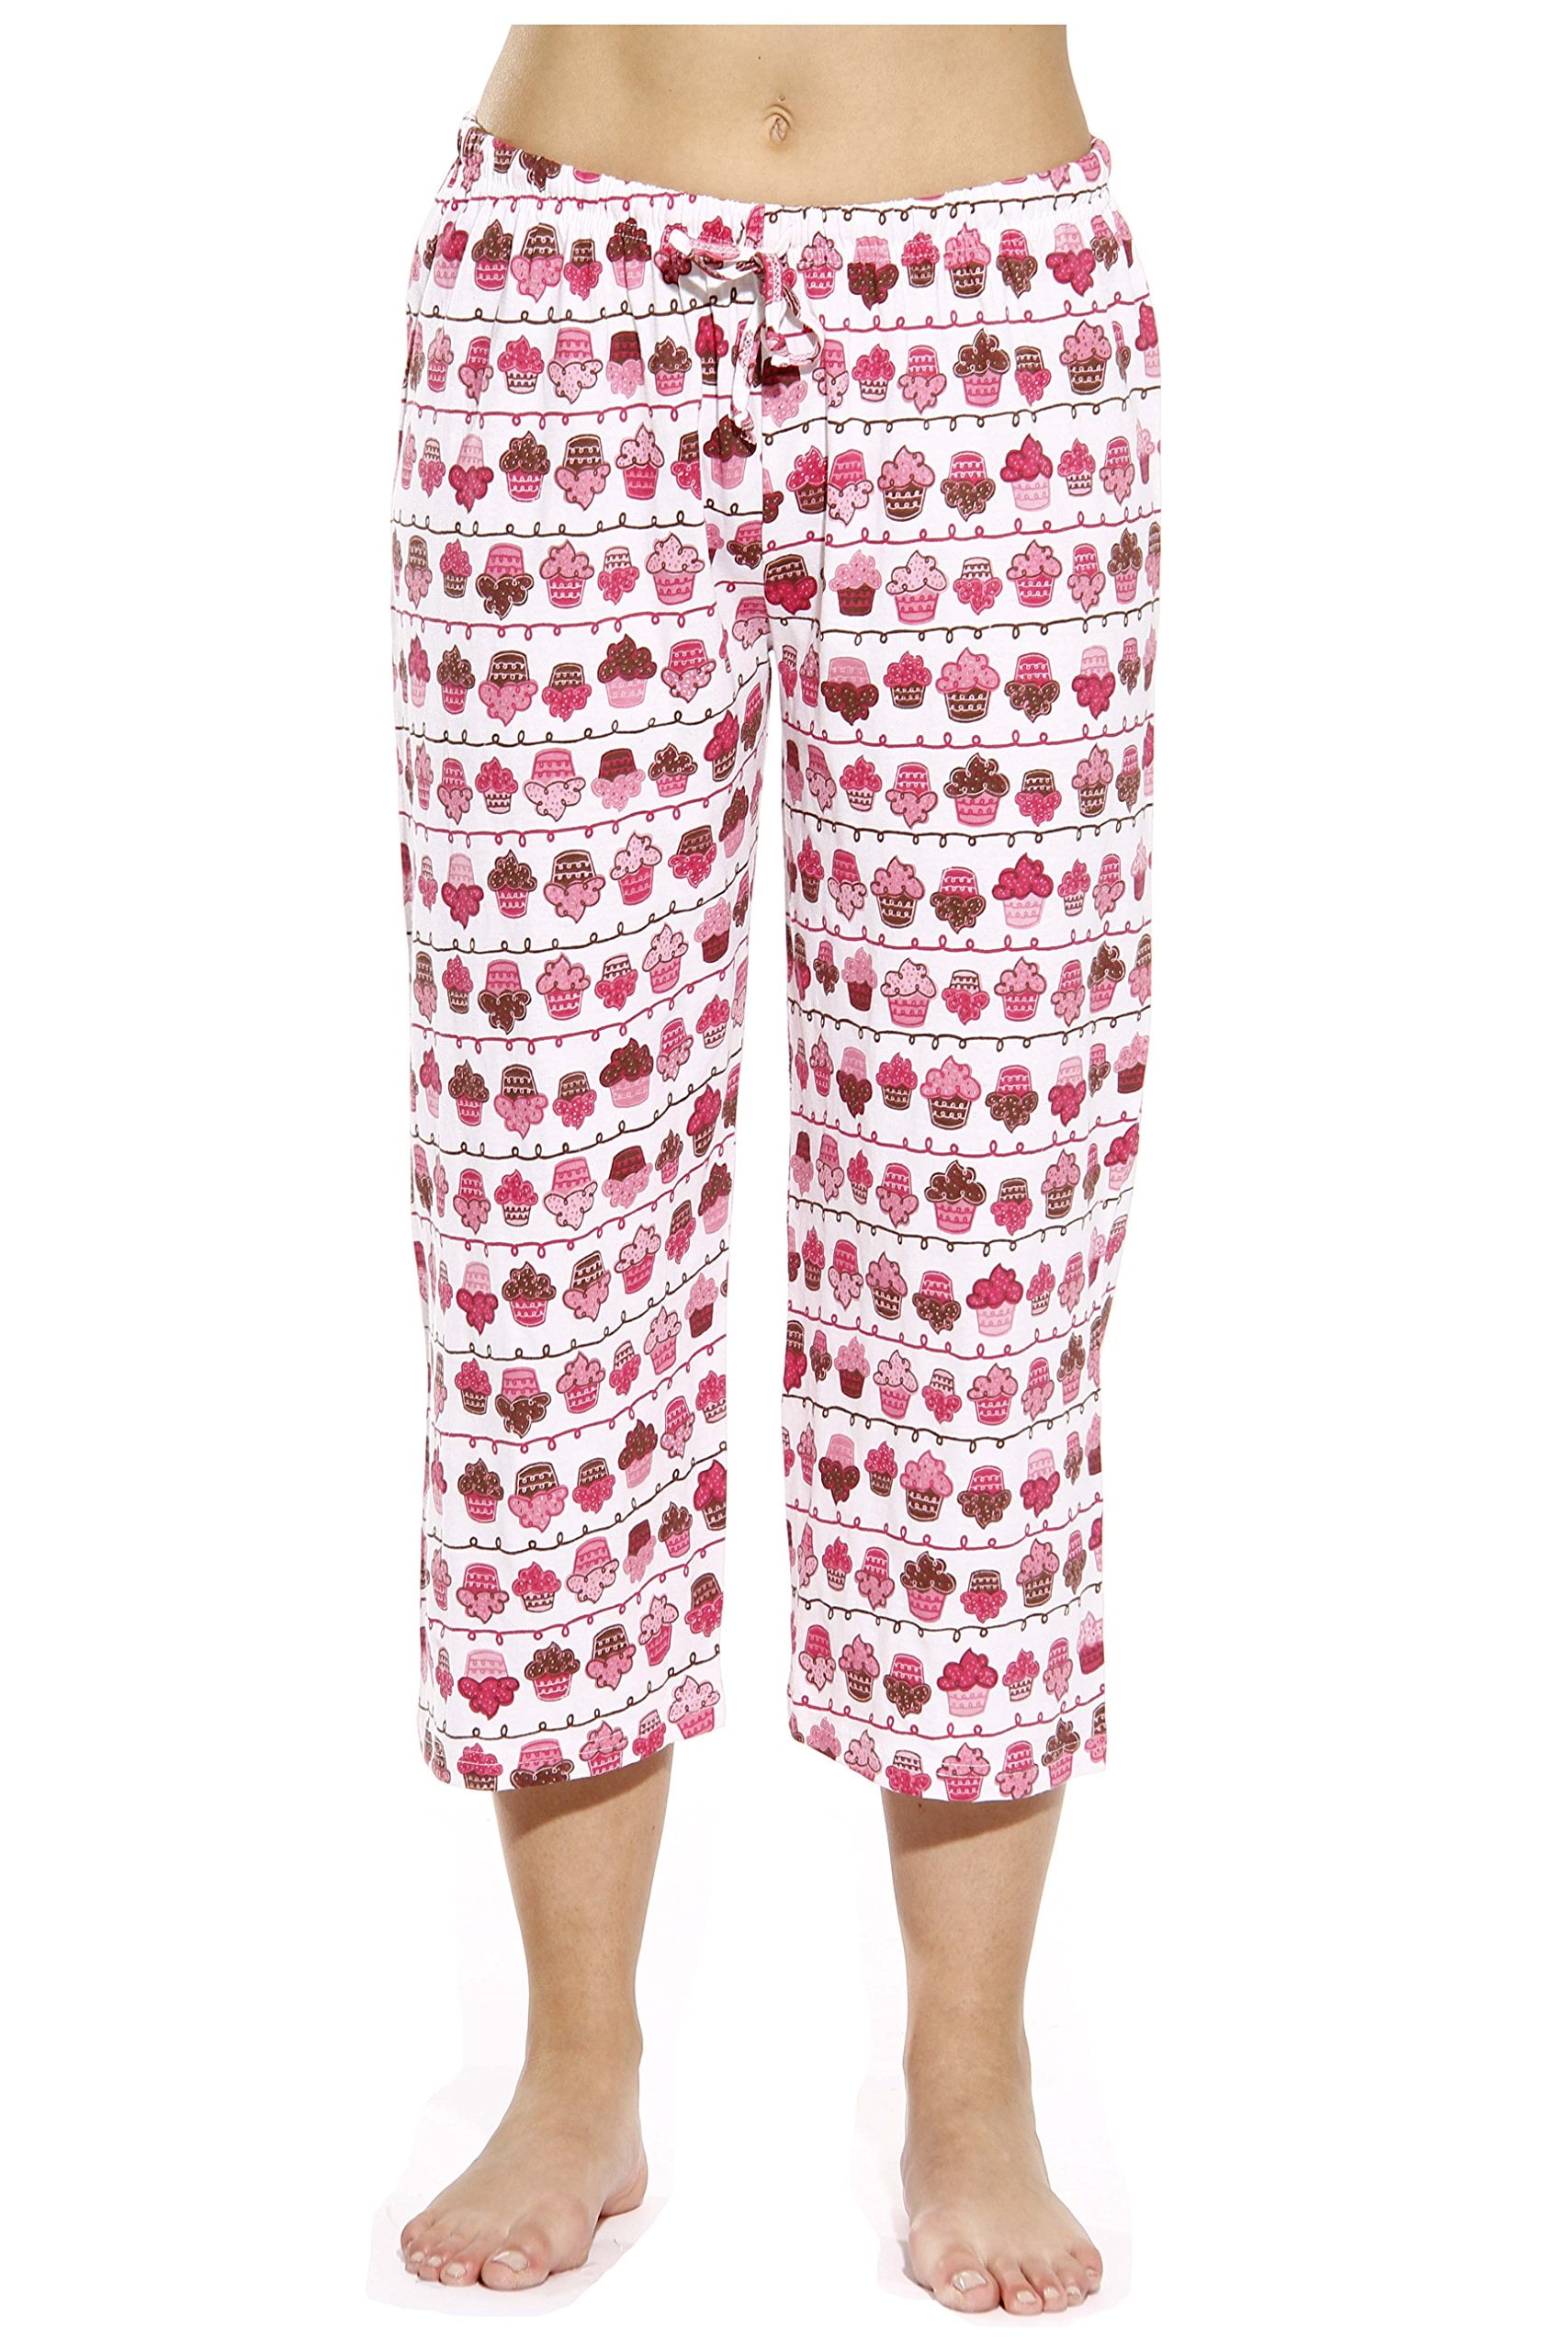 JUST LOVE 100% Cotton Women Pajama Capri Pants Sleepwear